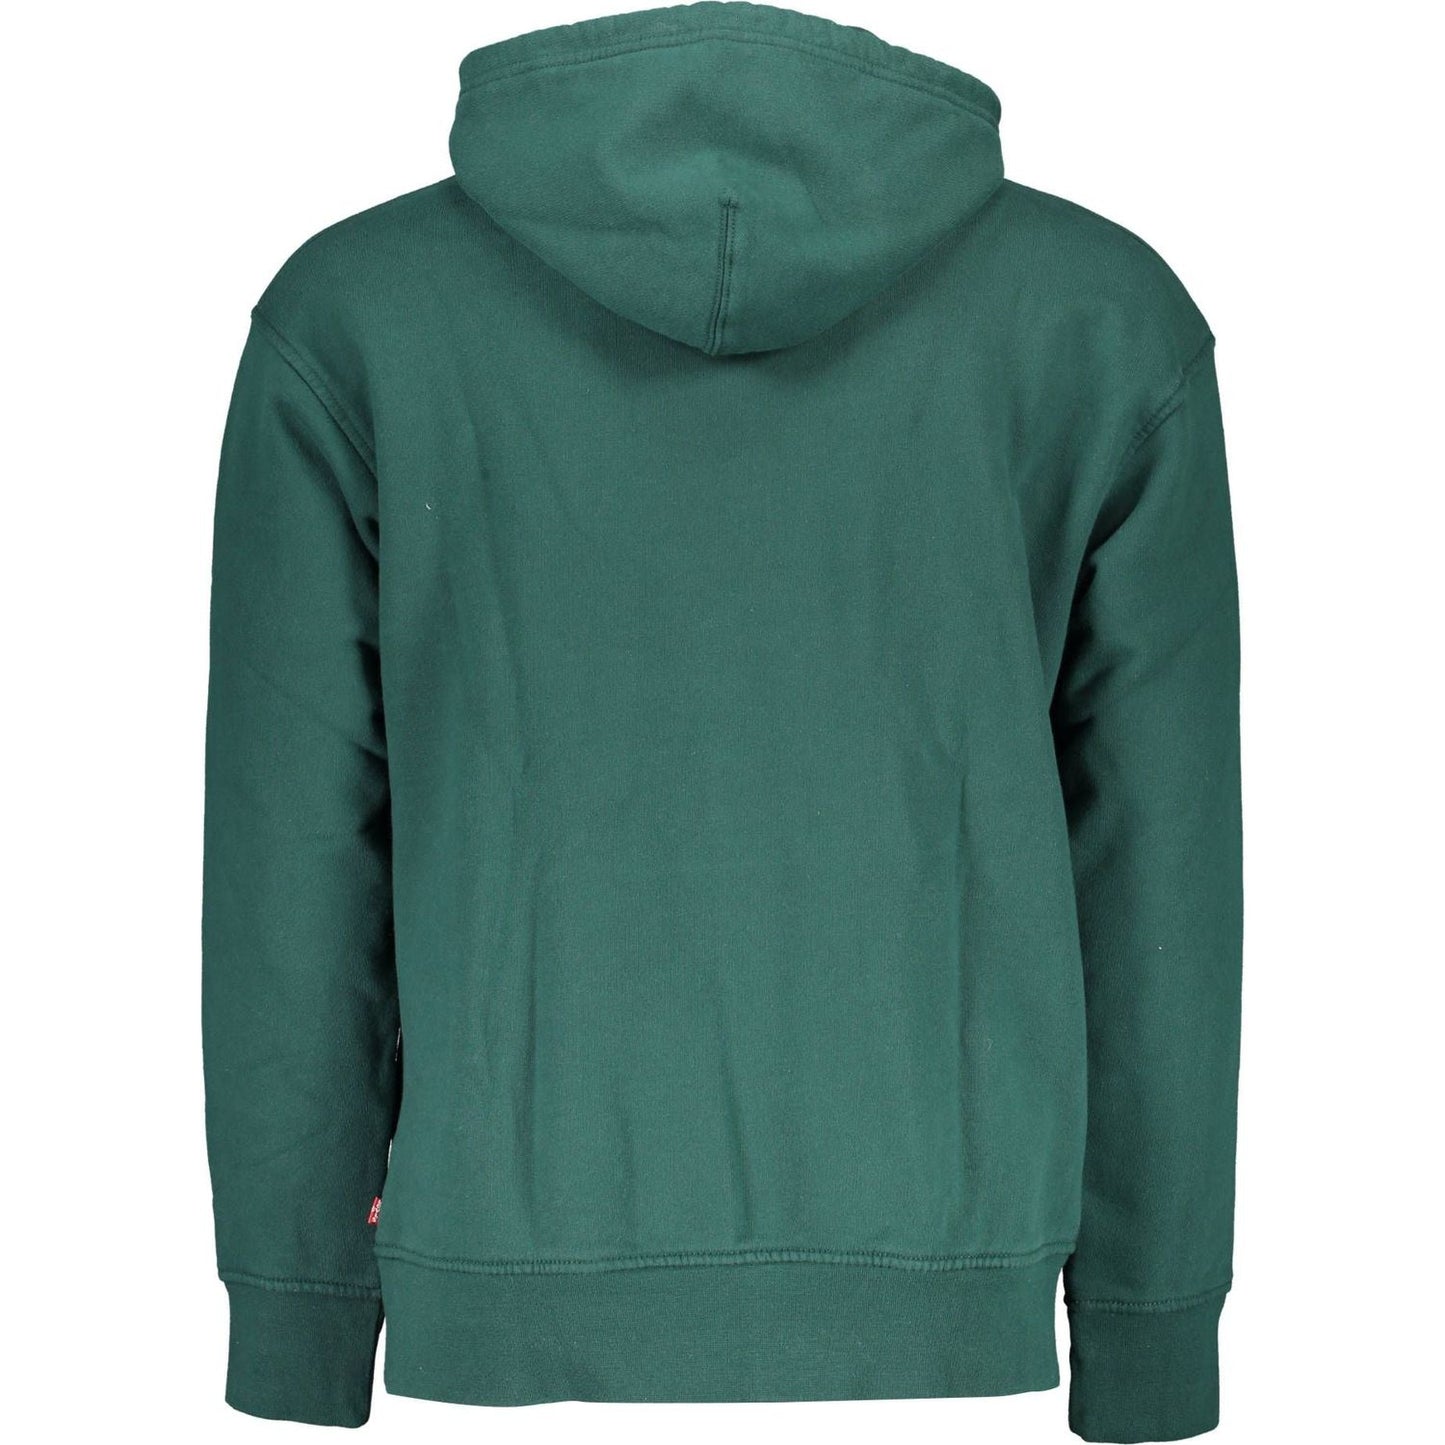 Levi's Chic Green Hooded Cotton Sweatshirt chic-green-hooded-cotton-sweatshirt